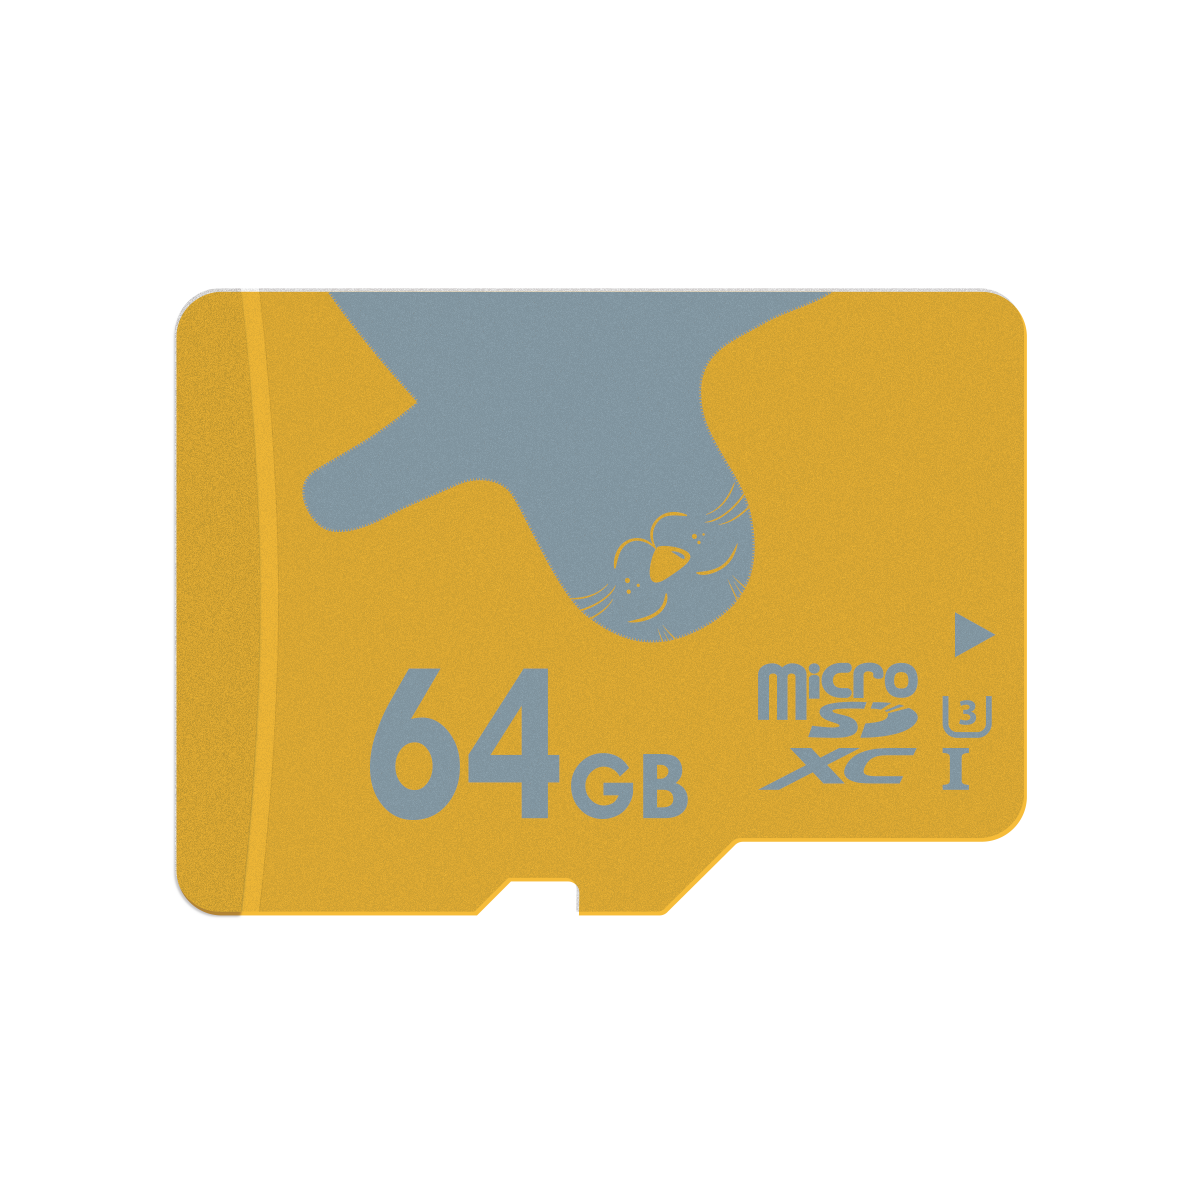 ALERTSEAL 64GB UHS-I (U3) / Class 10 (C10) microSDXC/TF Flash Memory Card